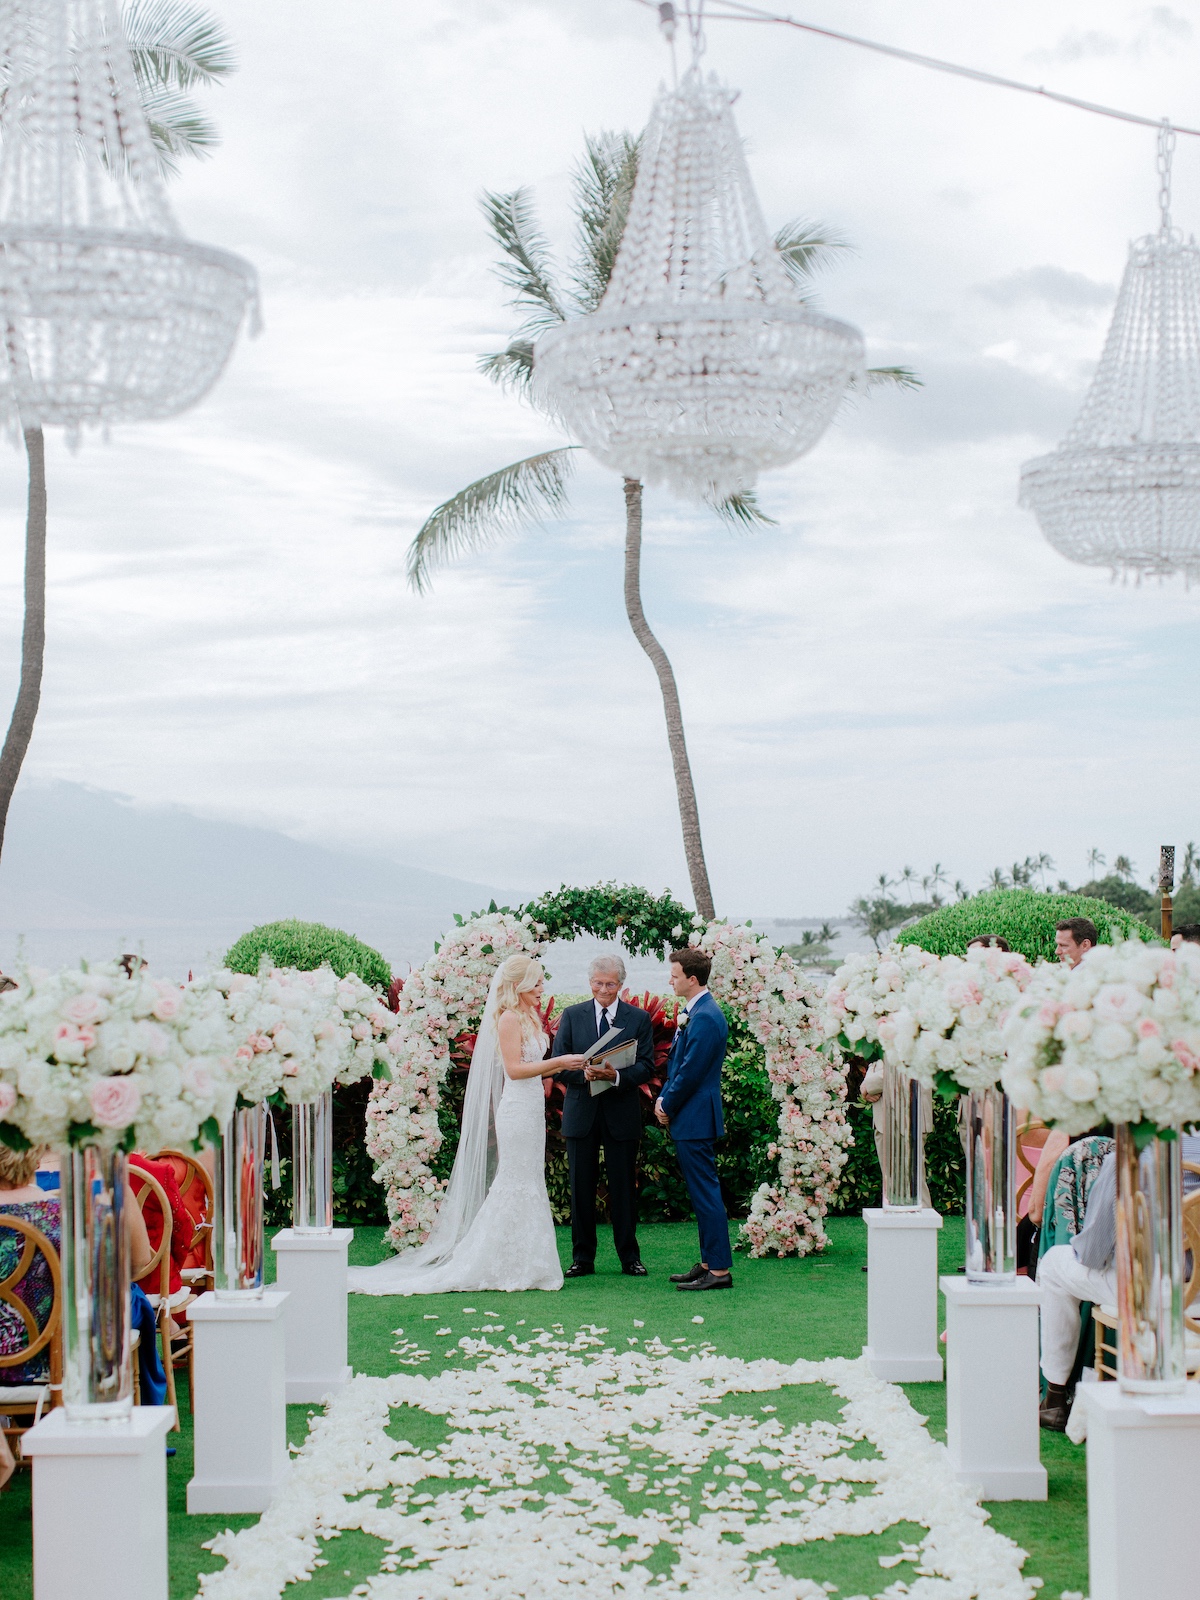 Wedding ceremony chandeliers